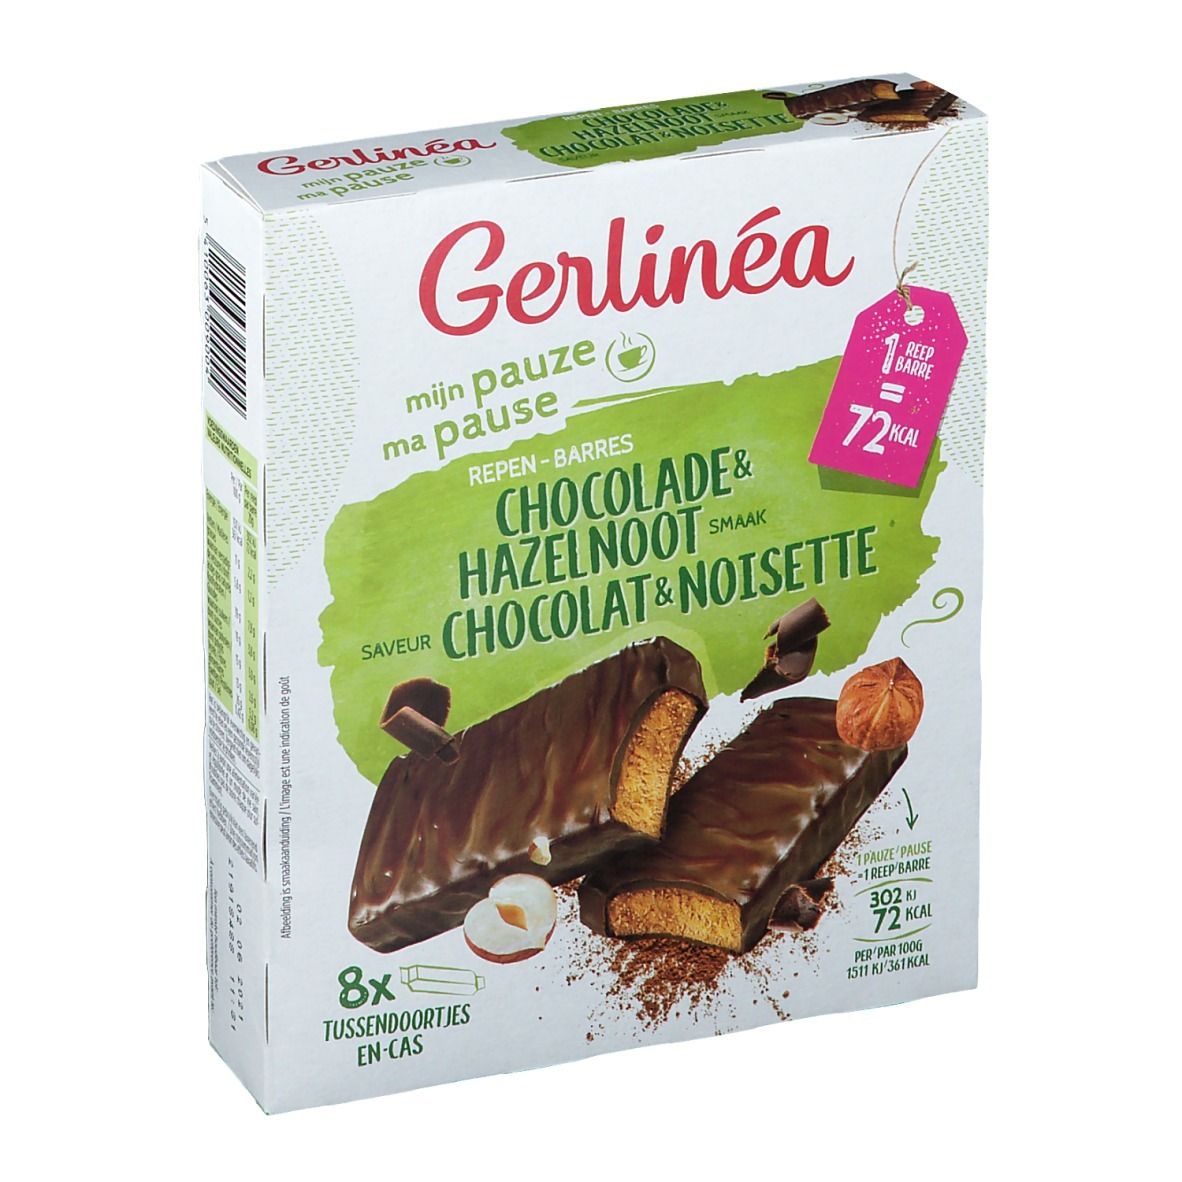 Gerlinéa Barres Chocolat & Noisette 8x20 g - Redcare Pharmacie